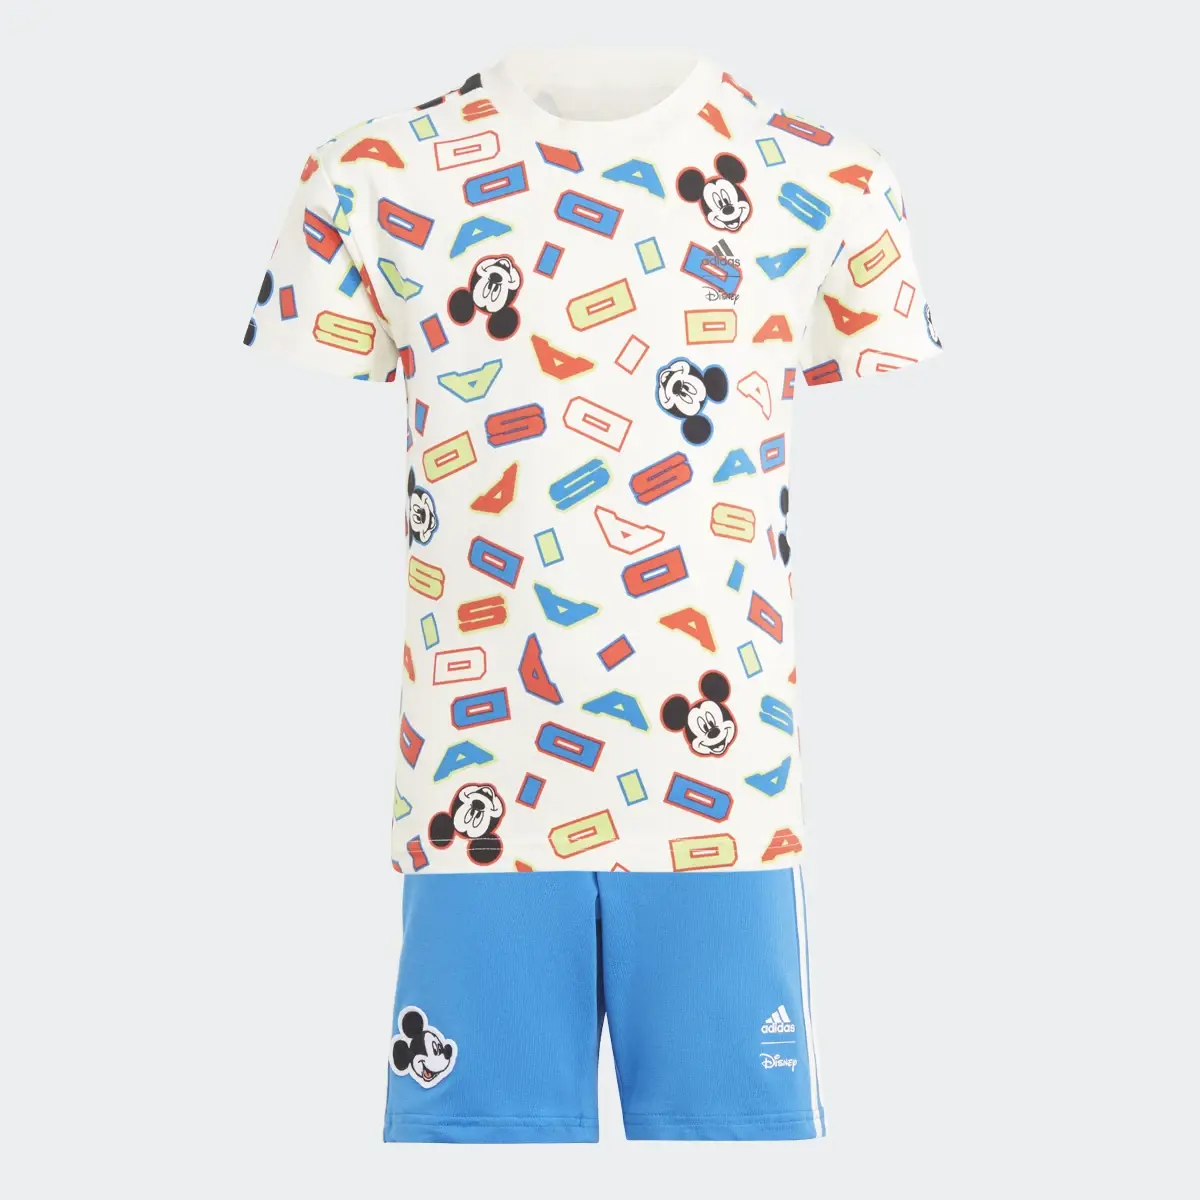 Adidas x Disney Mickey Mouse Tee and Shorts Set. 1